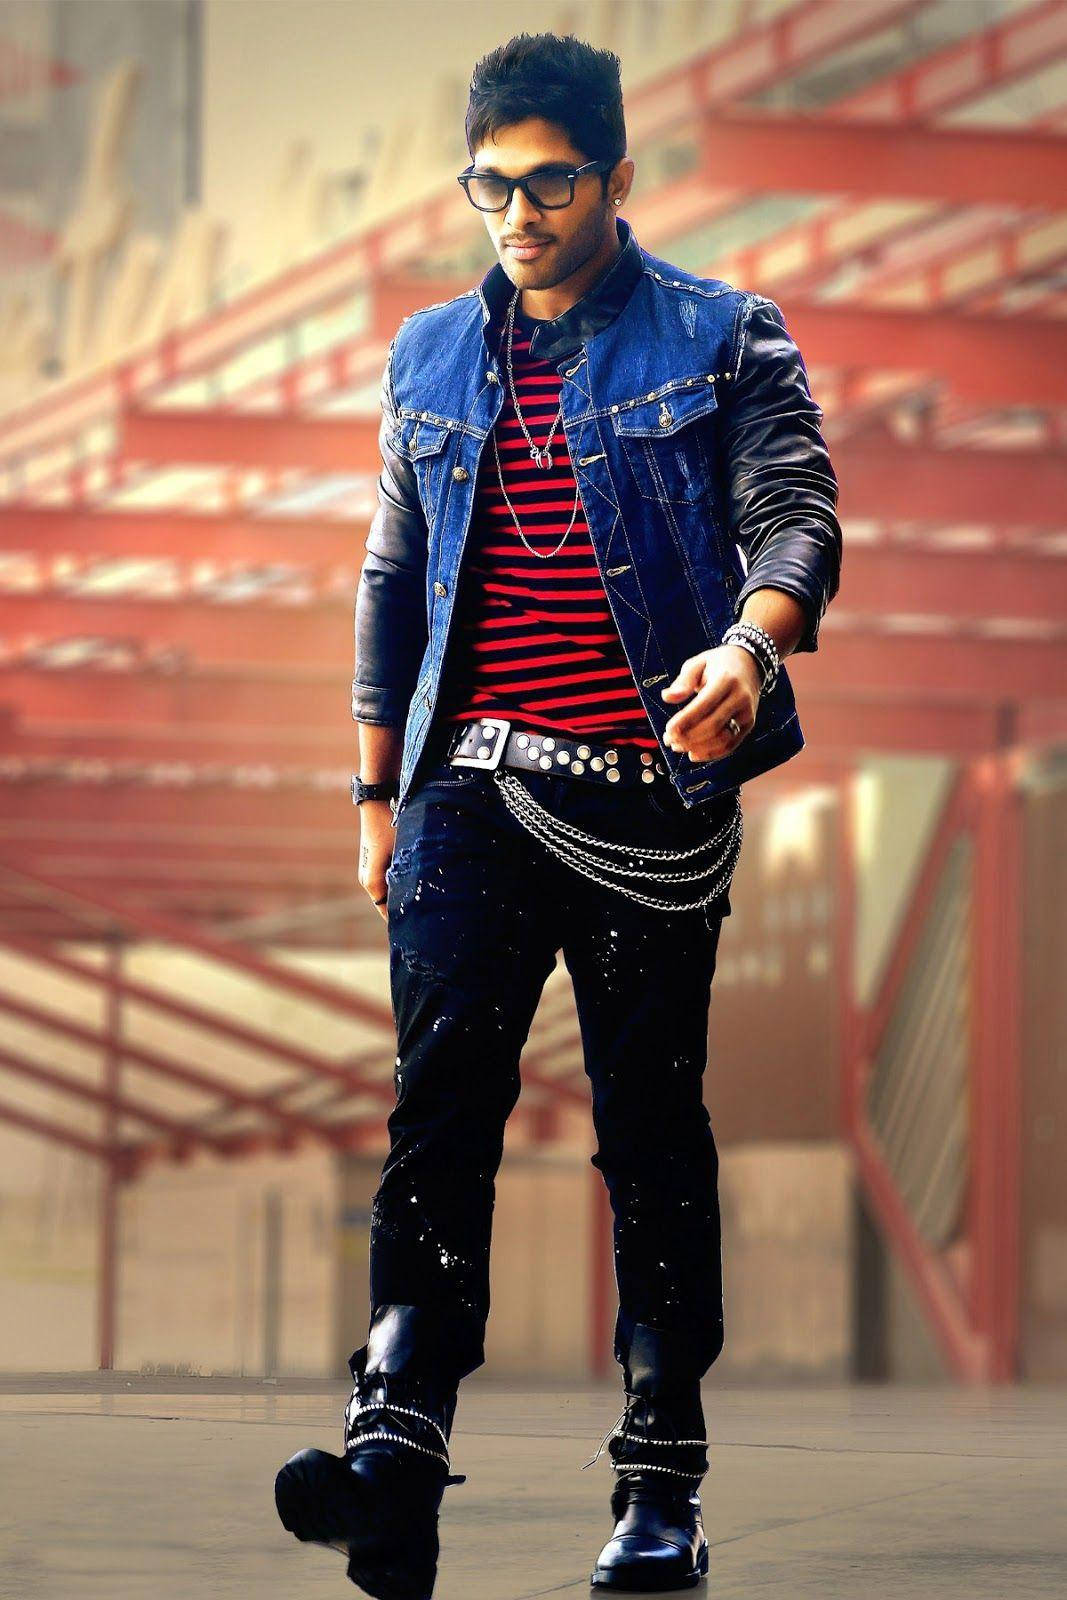 Allu Arjun With Jacket On Striped Shirt Background